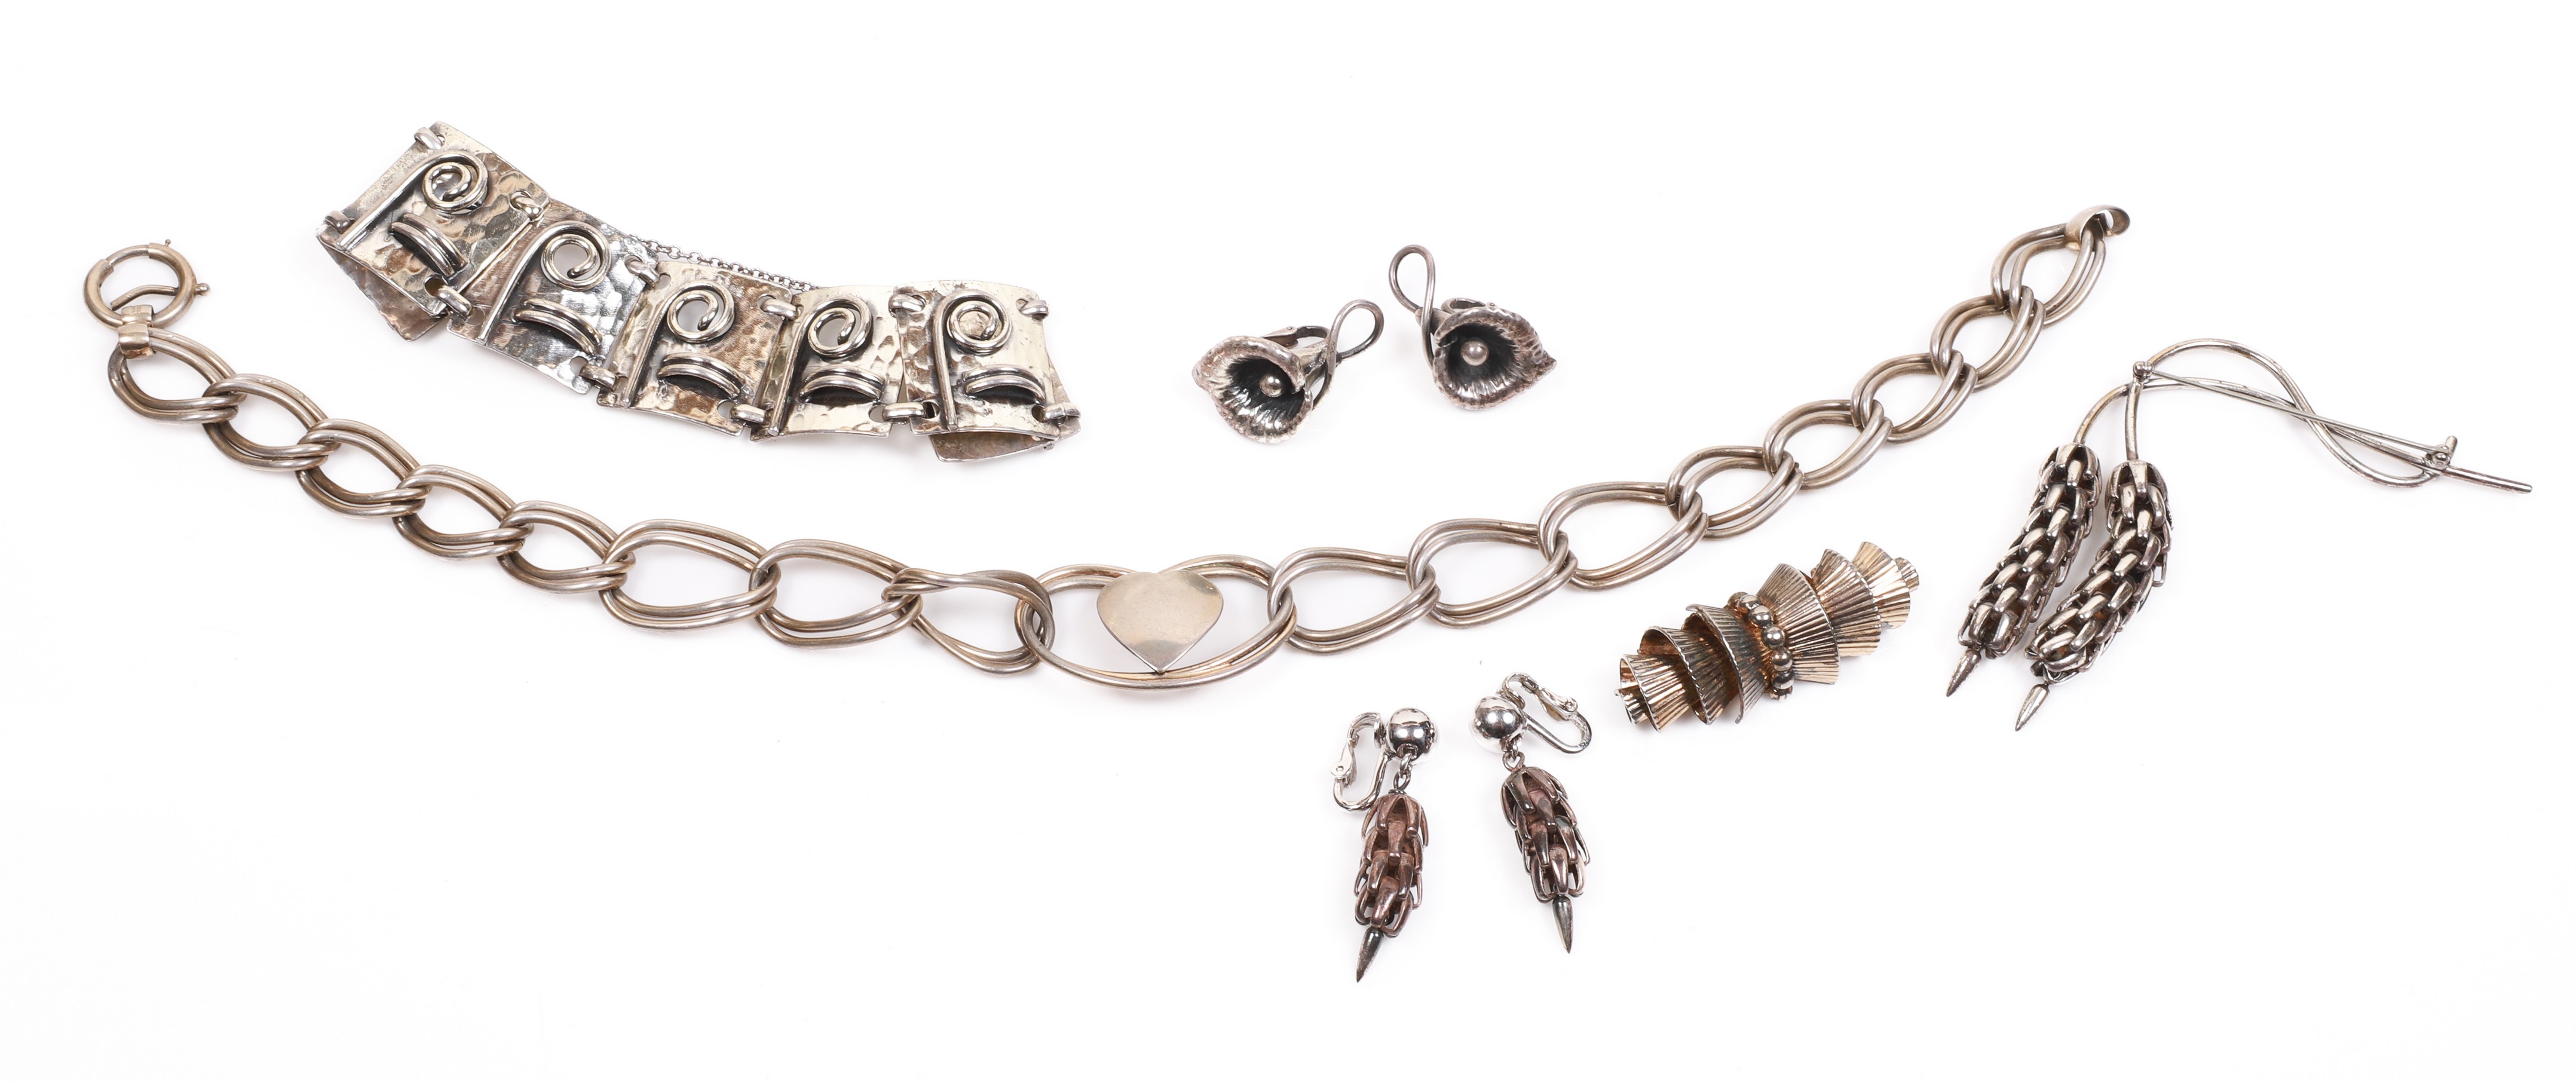 Napier designer jewelry to include